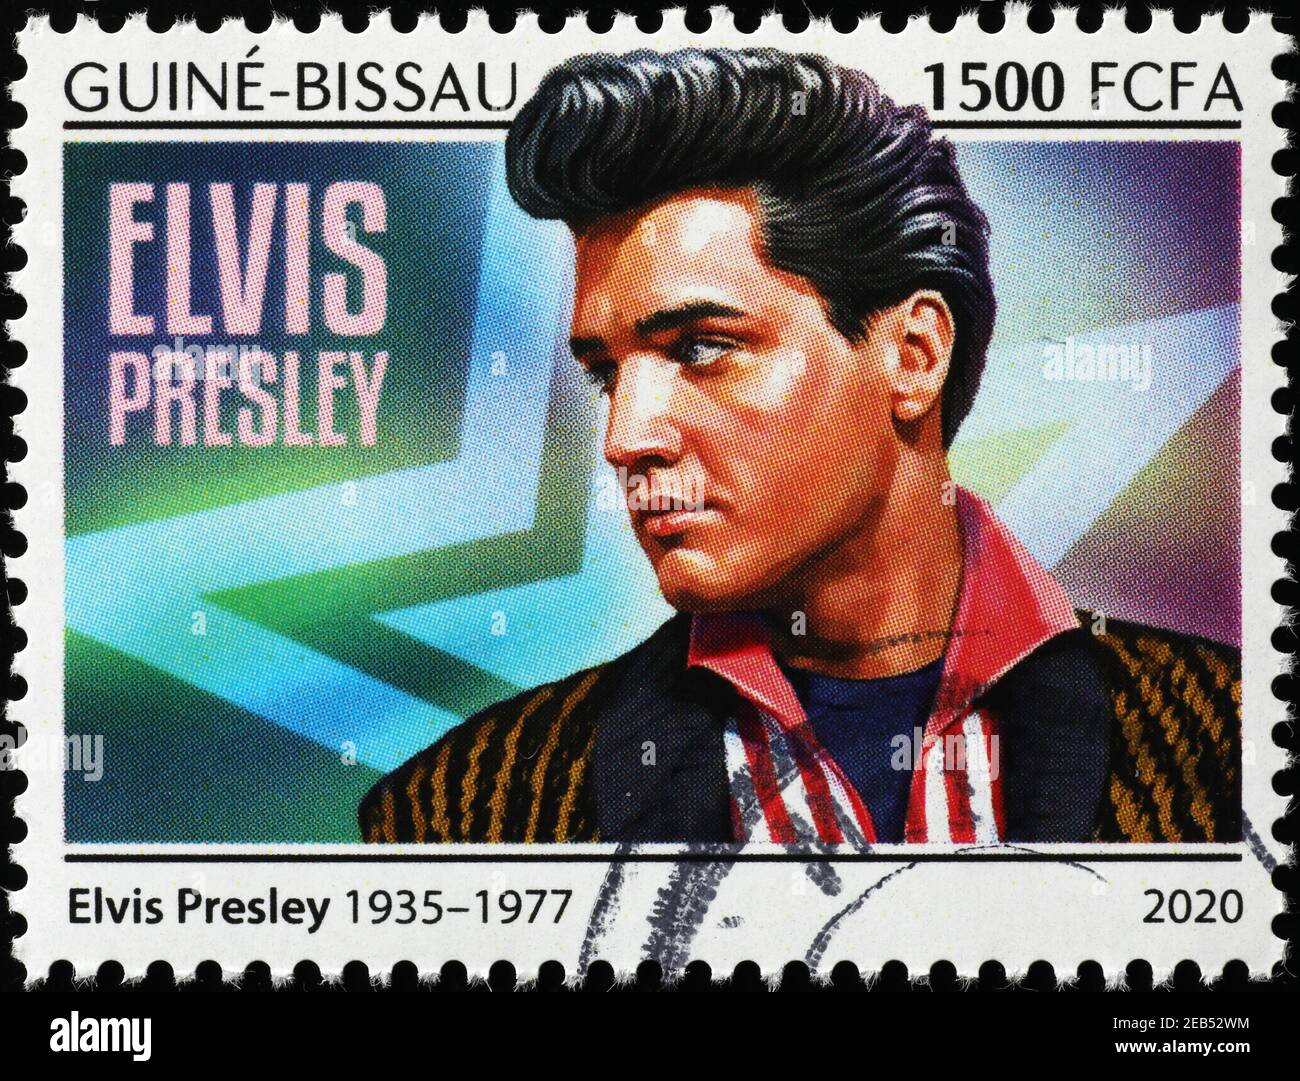 Elvis Presley on stamp of Guinea Bissau Stock Photo